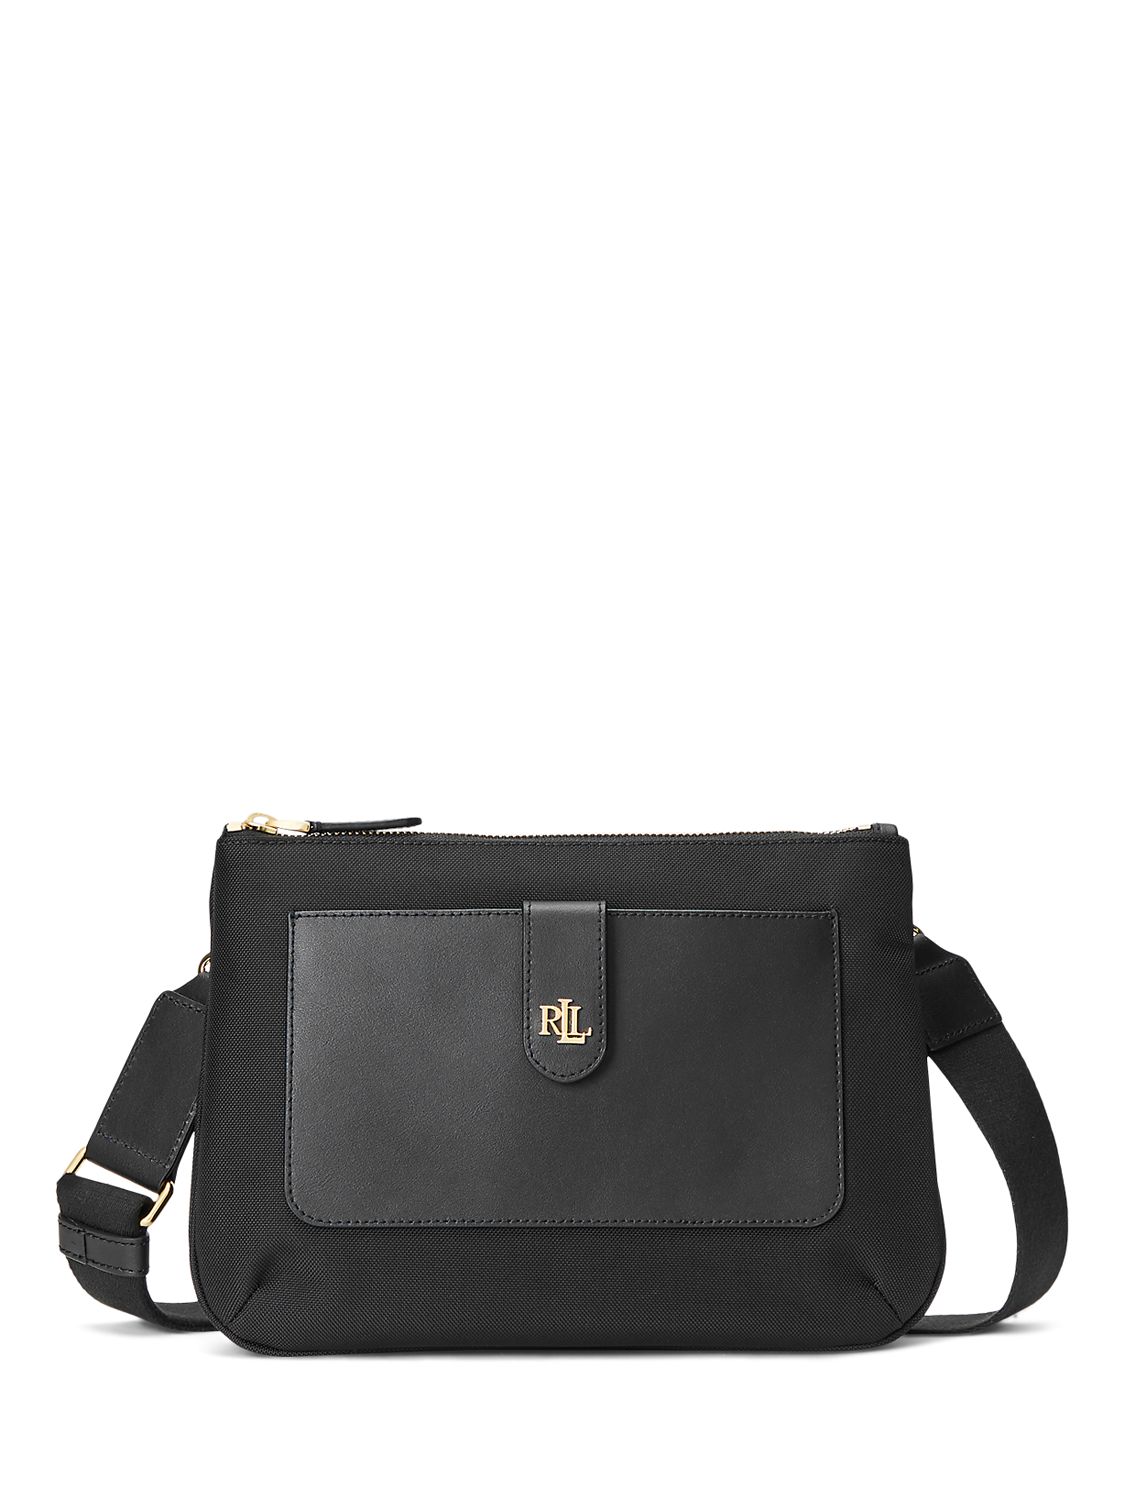 Women's Ralph Lauren Handbags, Bags & Purses | John Lewis & Partners